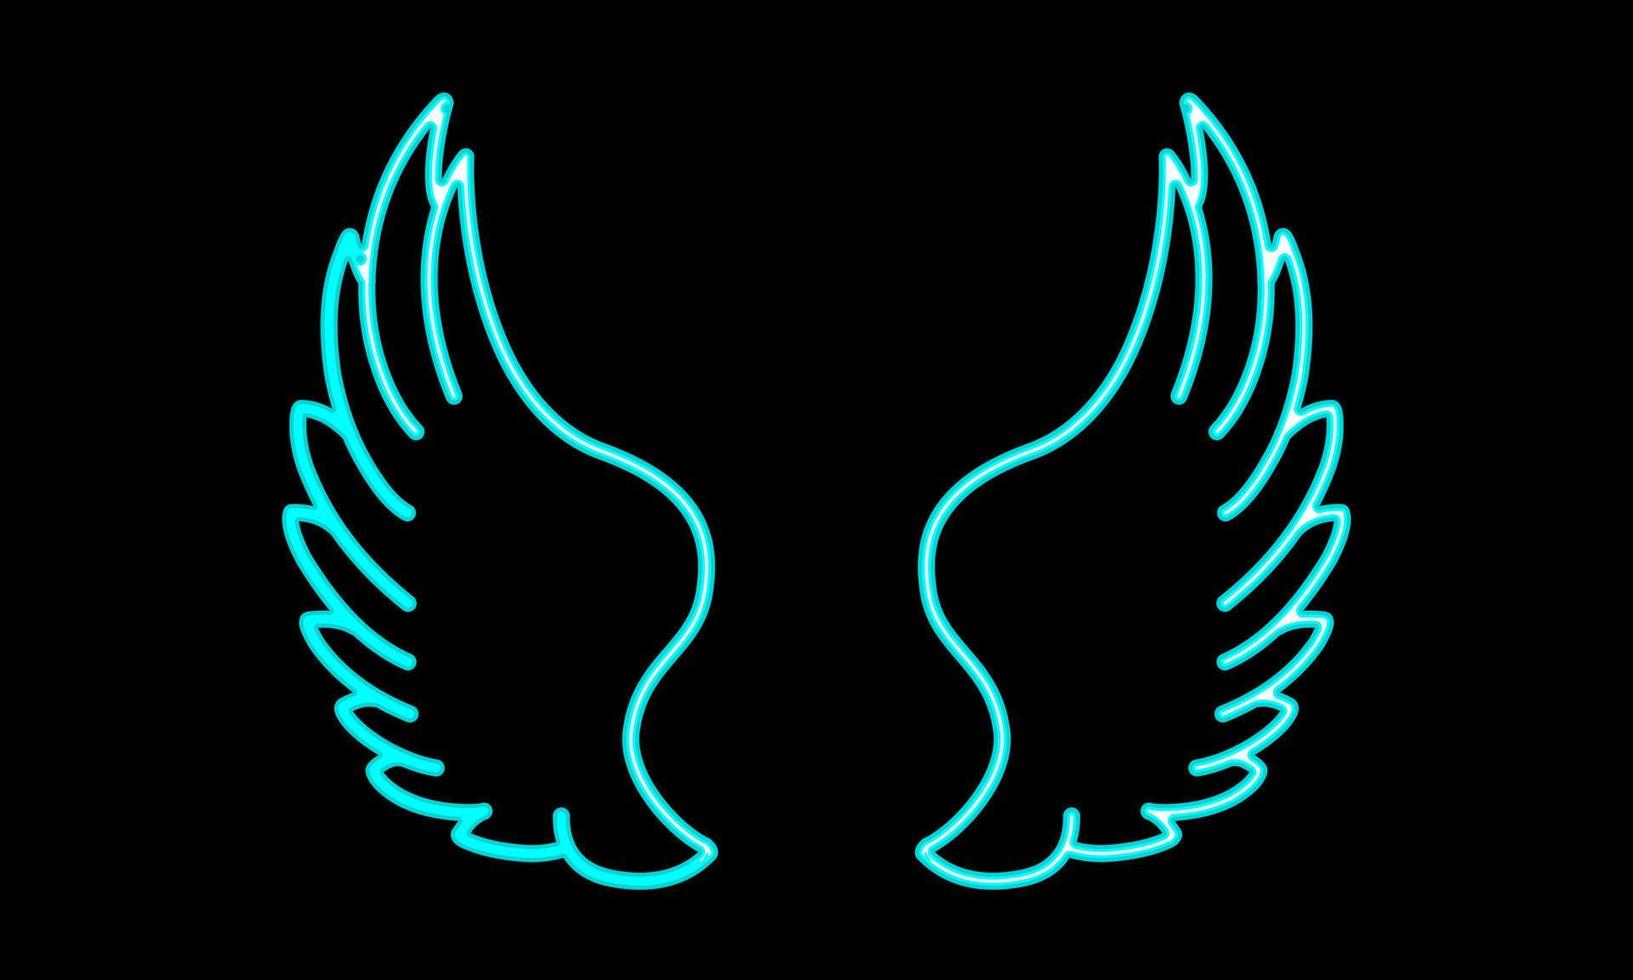 vetor livre asas de anjo neon brilhantes